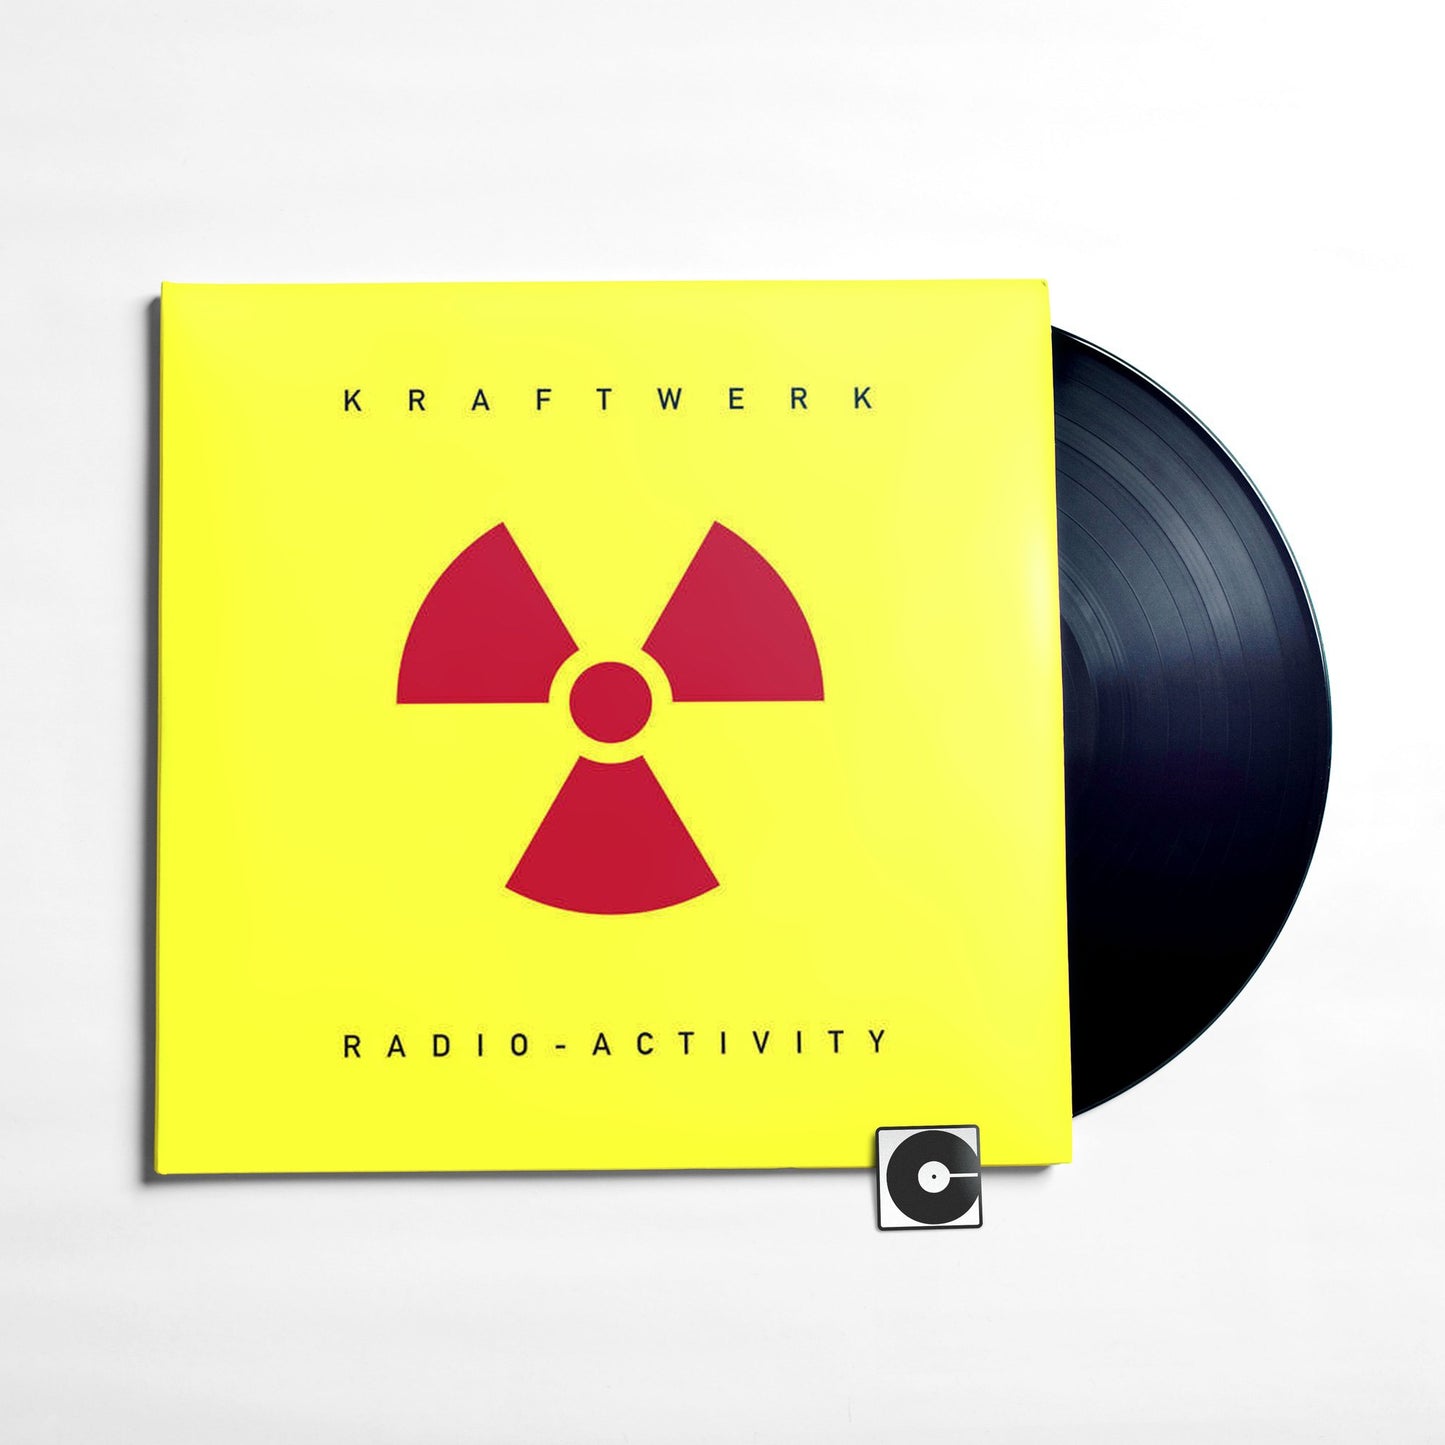 Kraftwerk - "Radio - Activity"